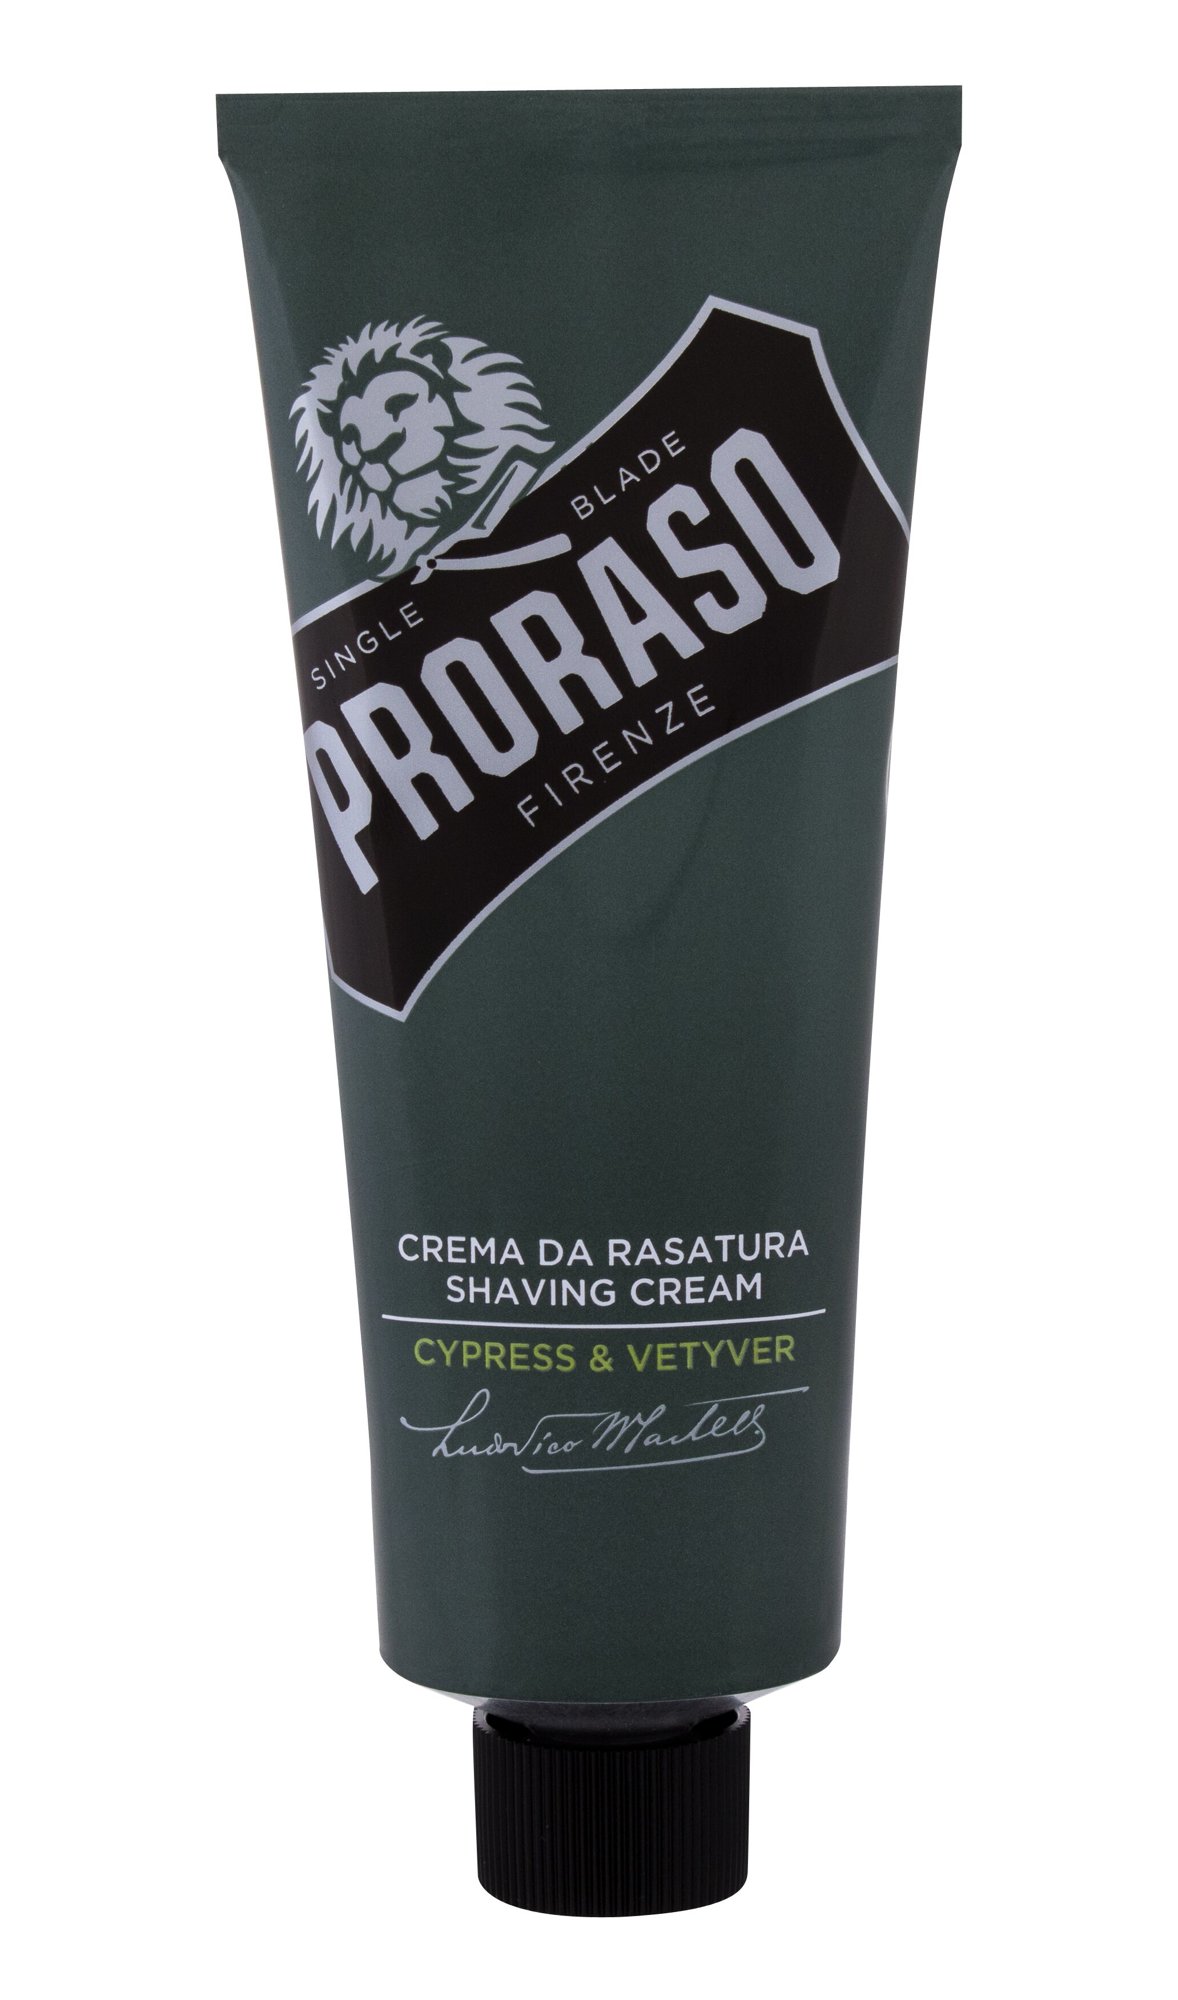 PRORASO Cypress & Vetyver Shaving Cream skutimosi kremas